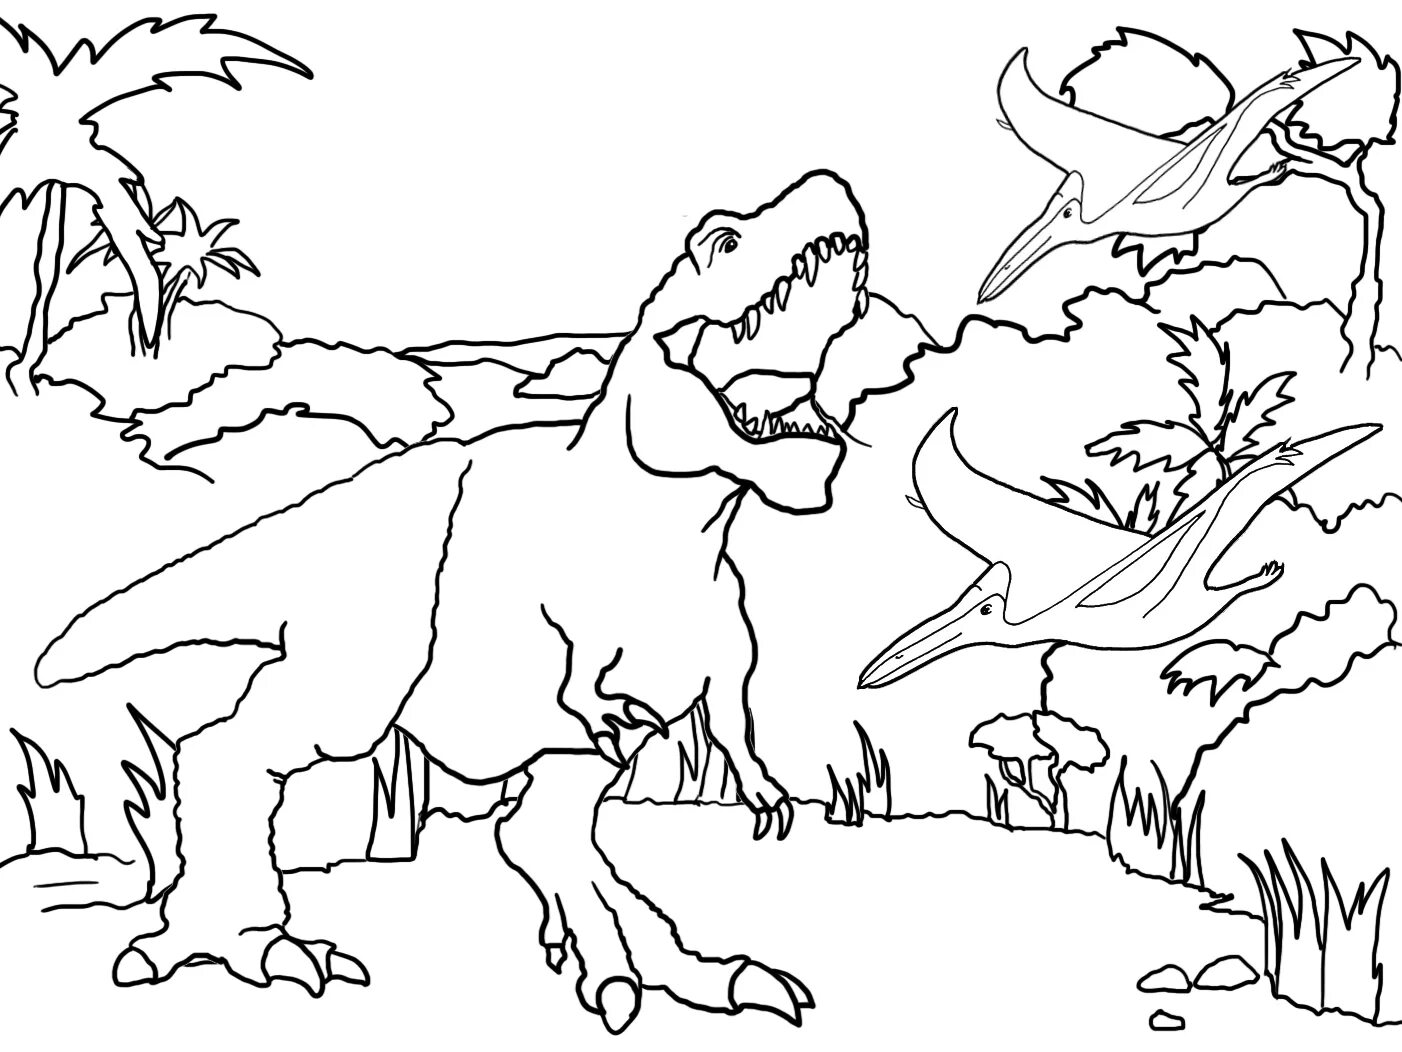 Динозавры раскраска а4. Тарбозавр разукрашка. Раскраски для детей Тарбозавр. Раскраски для мальчиков Тарбозавр. Тарбозавр раскраска динозавра.